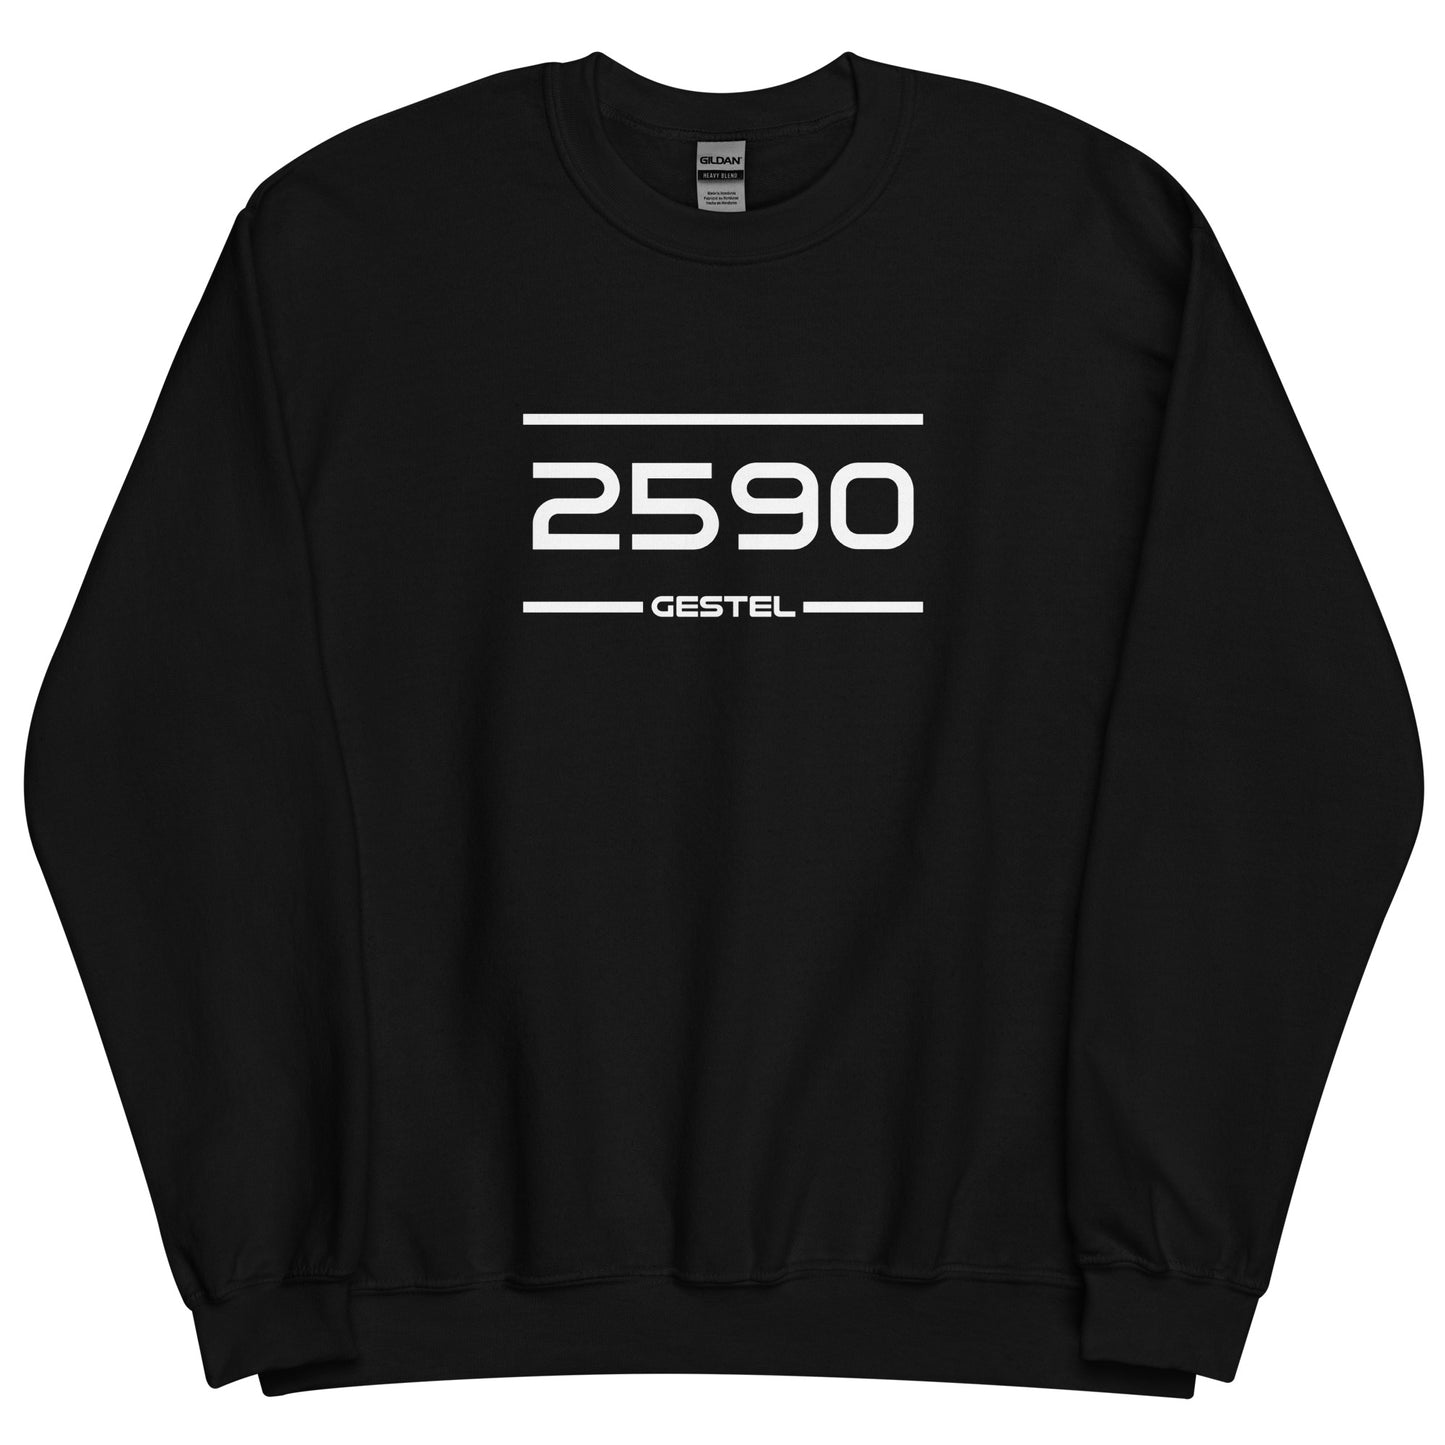 Sweater - 2590 - Gestel (M/V)